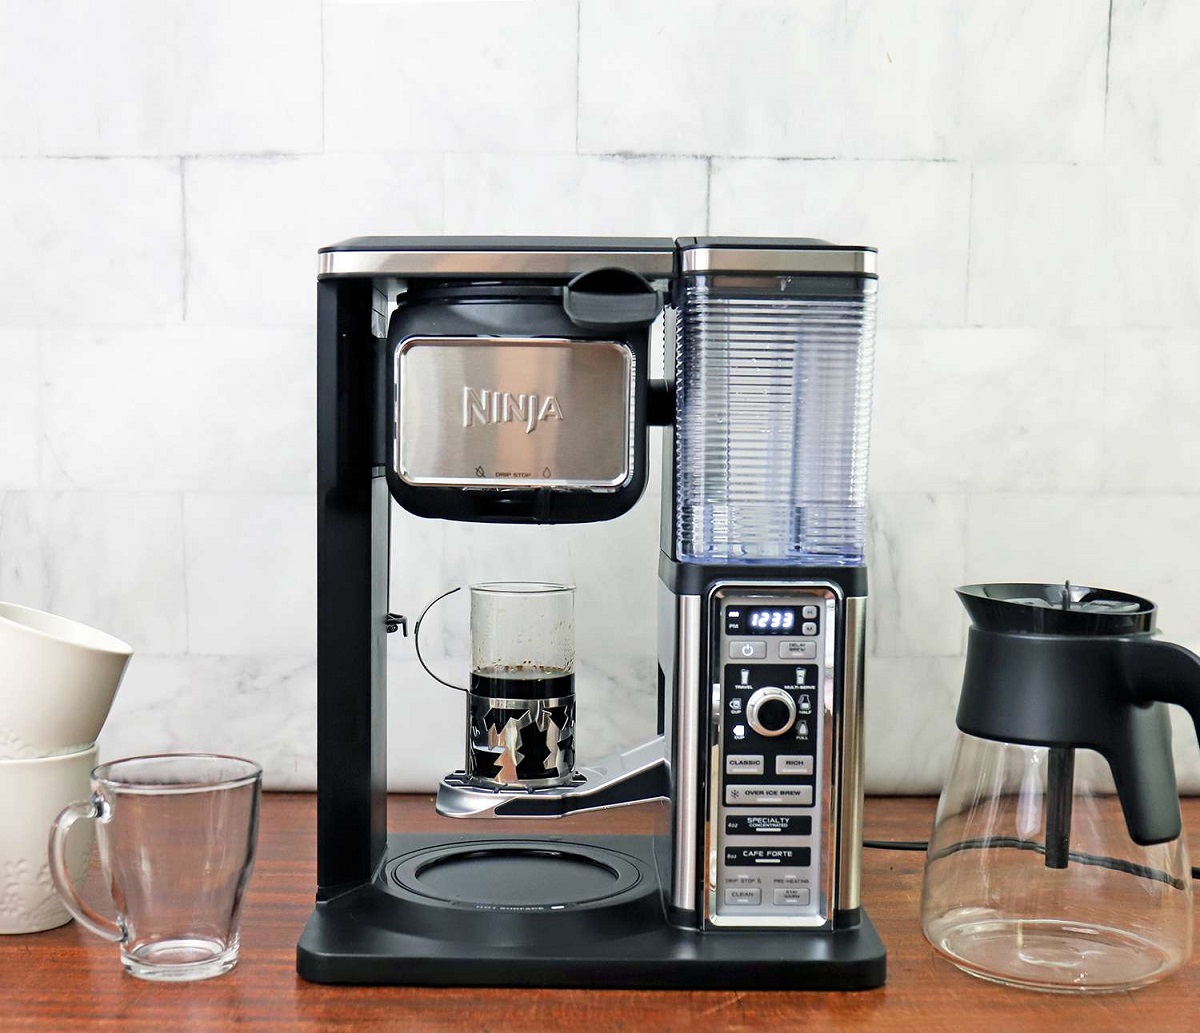 How To Make Espresso With A Ninja Coffee Machine